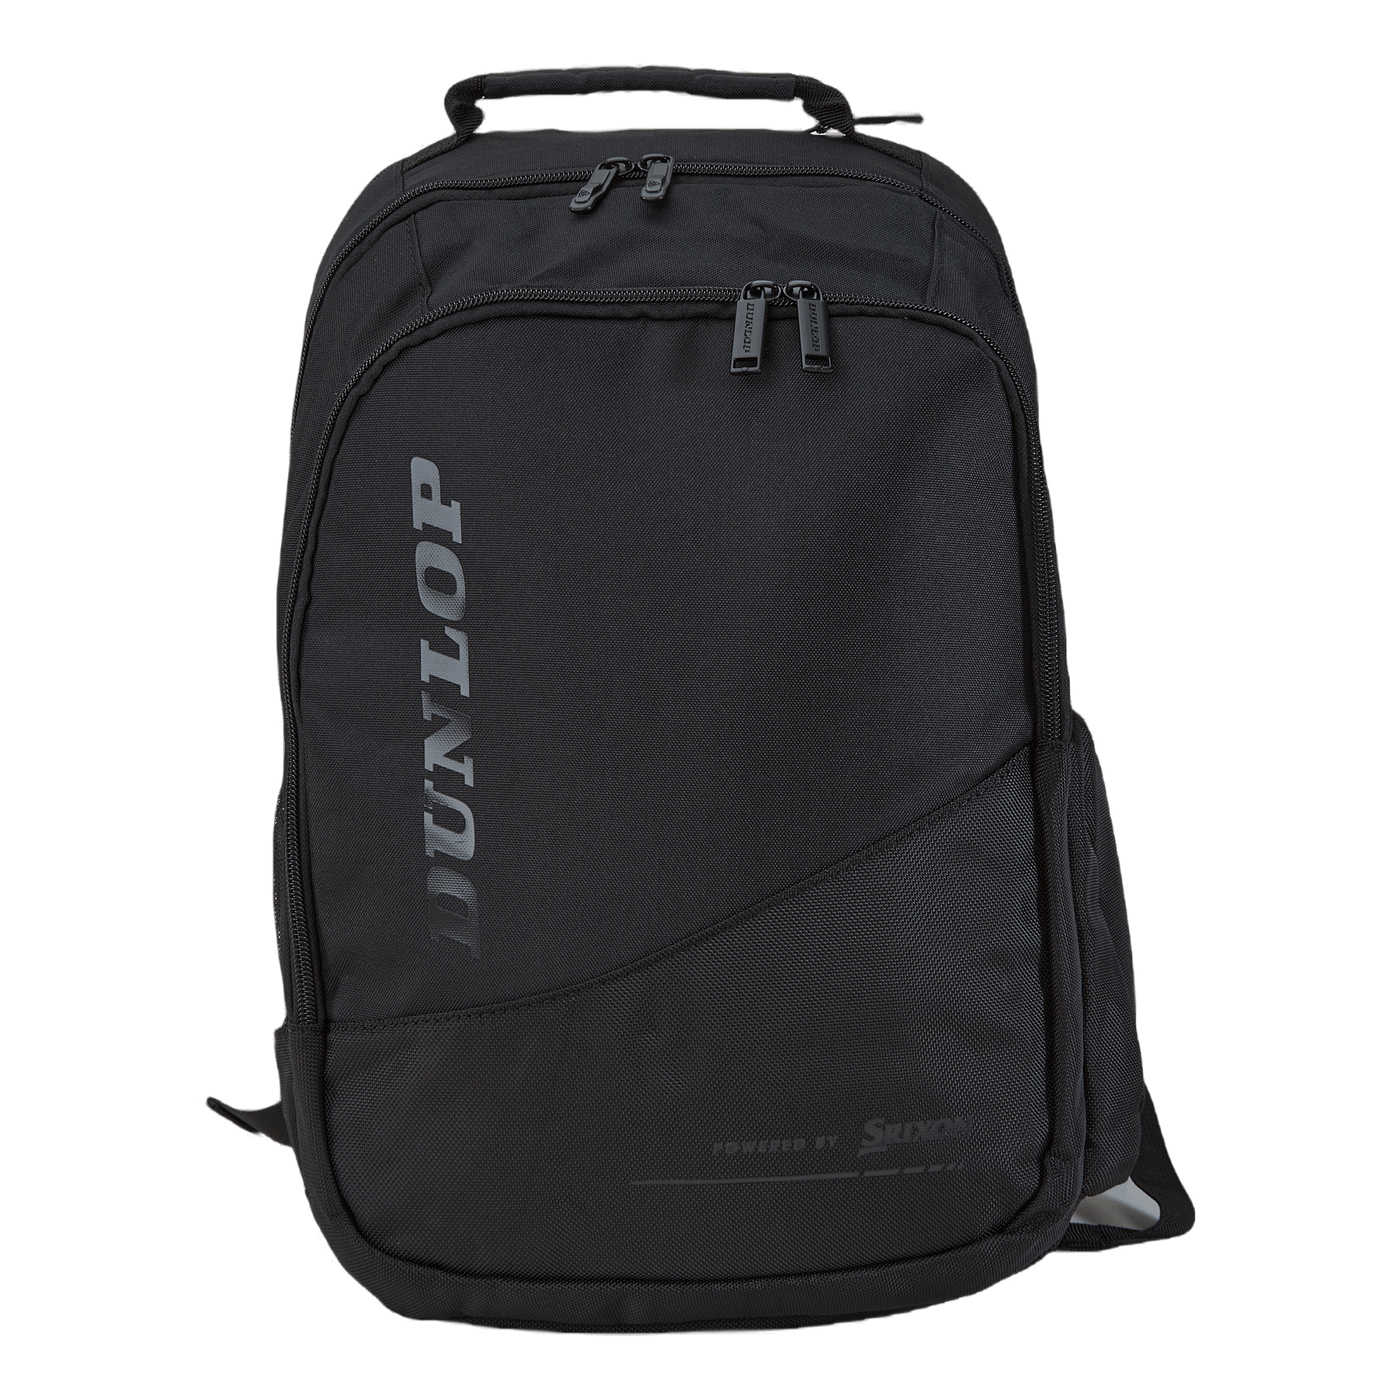 Cx-performance Backpack Black/black